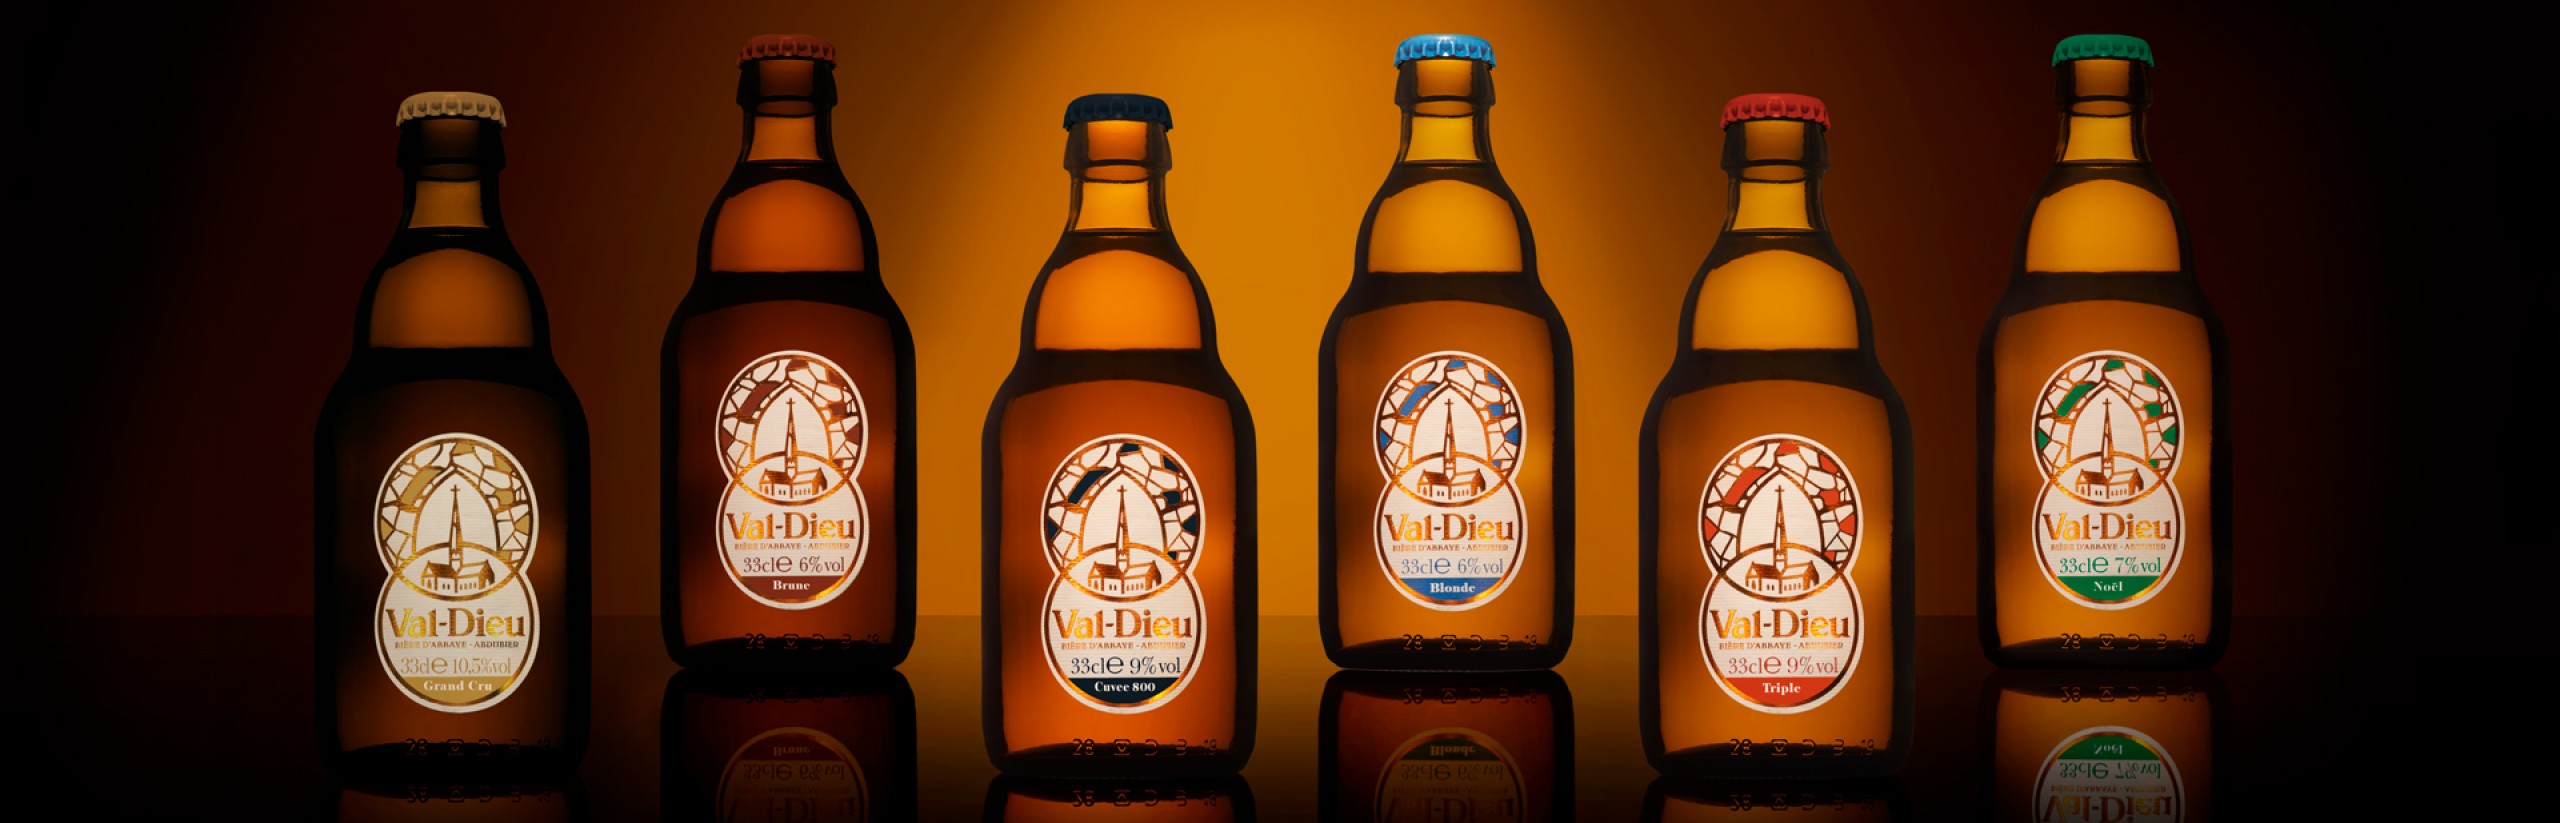 Quatre Mains package design - Package design beer, abbey, val-dieu, valdieu, herve, quatre mains